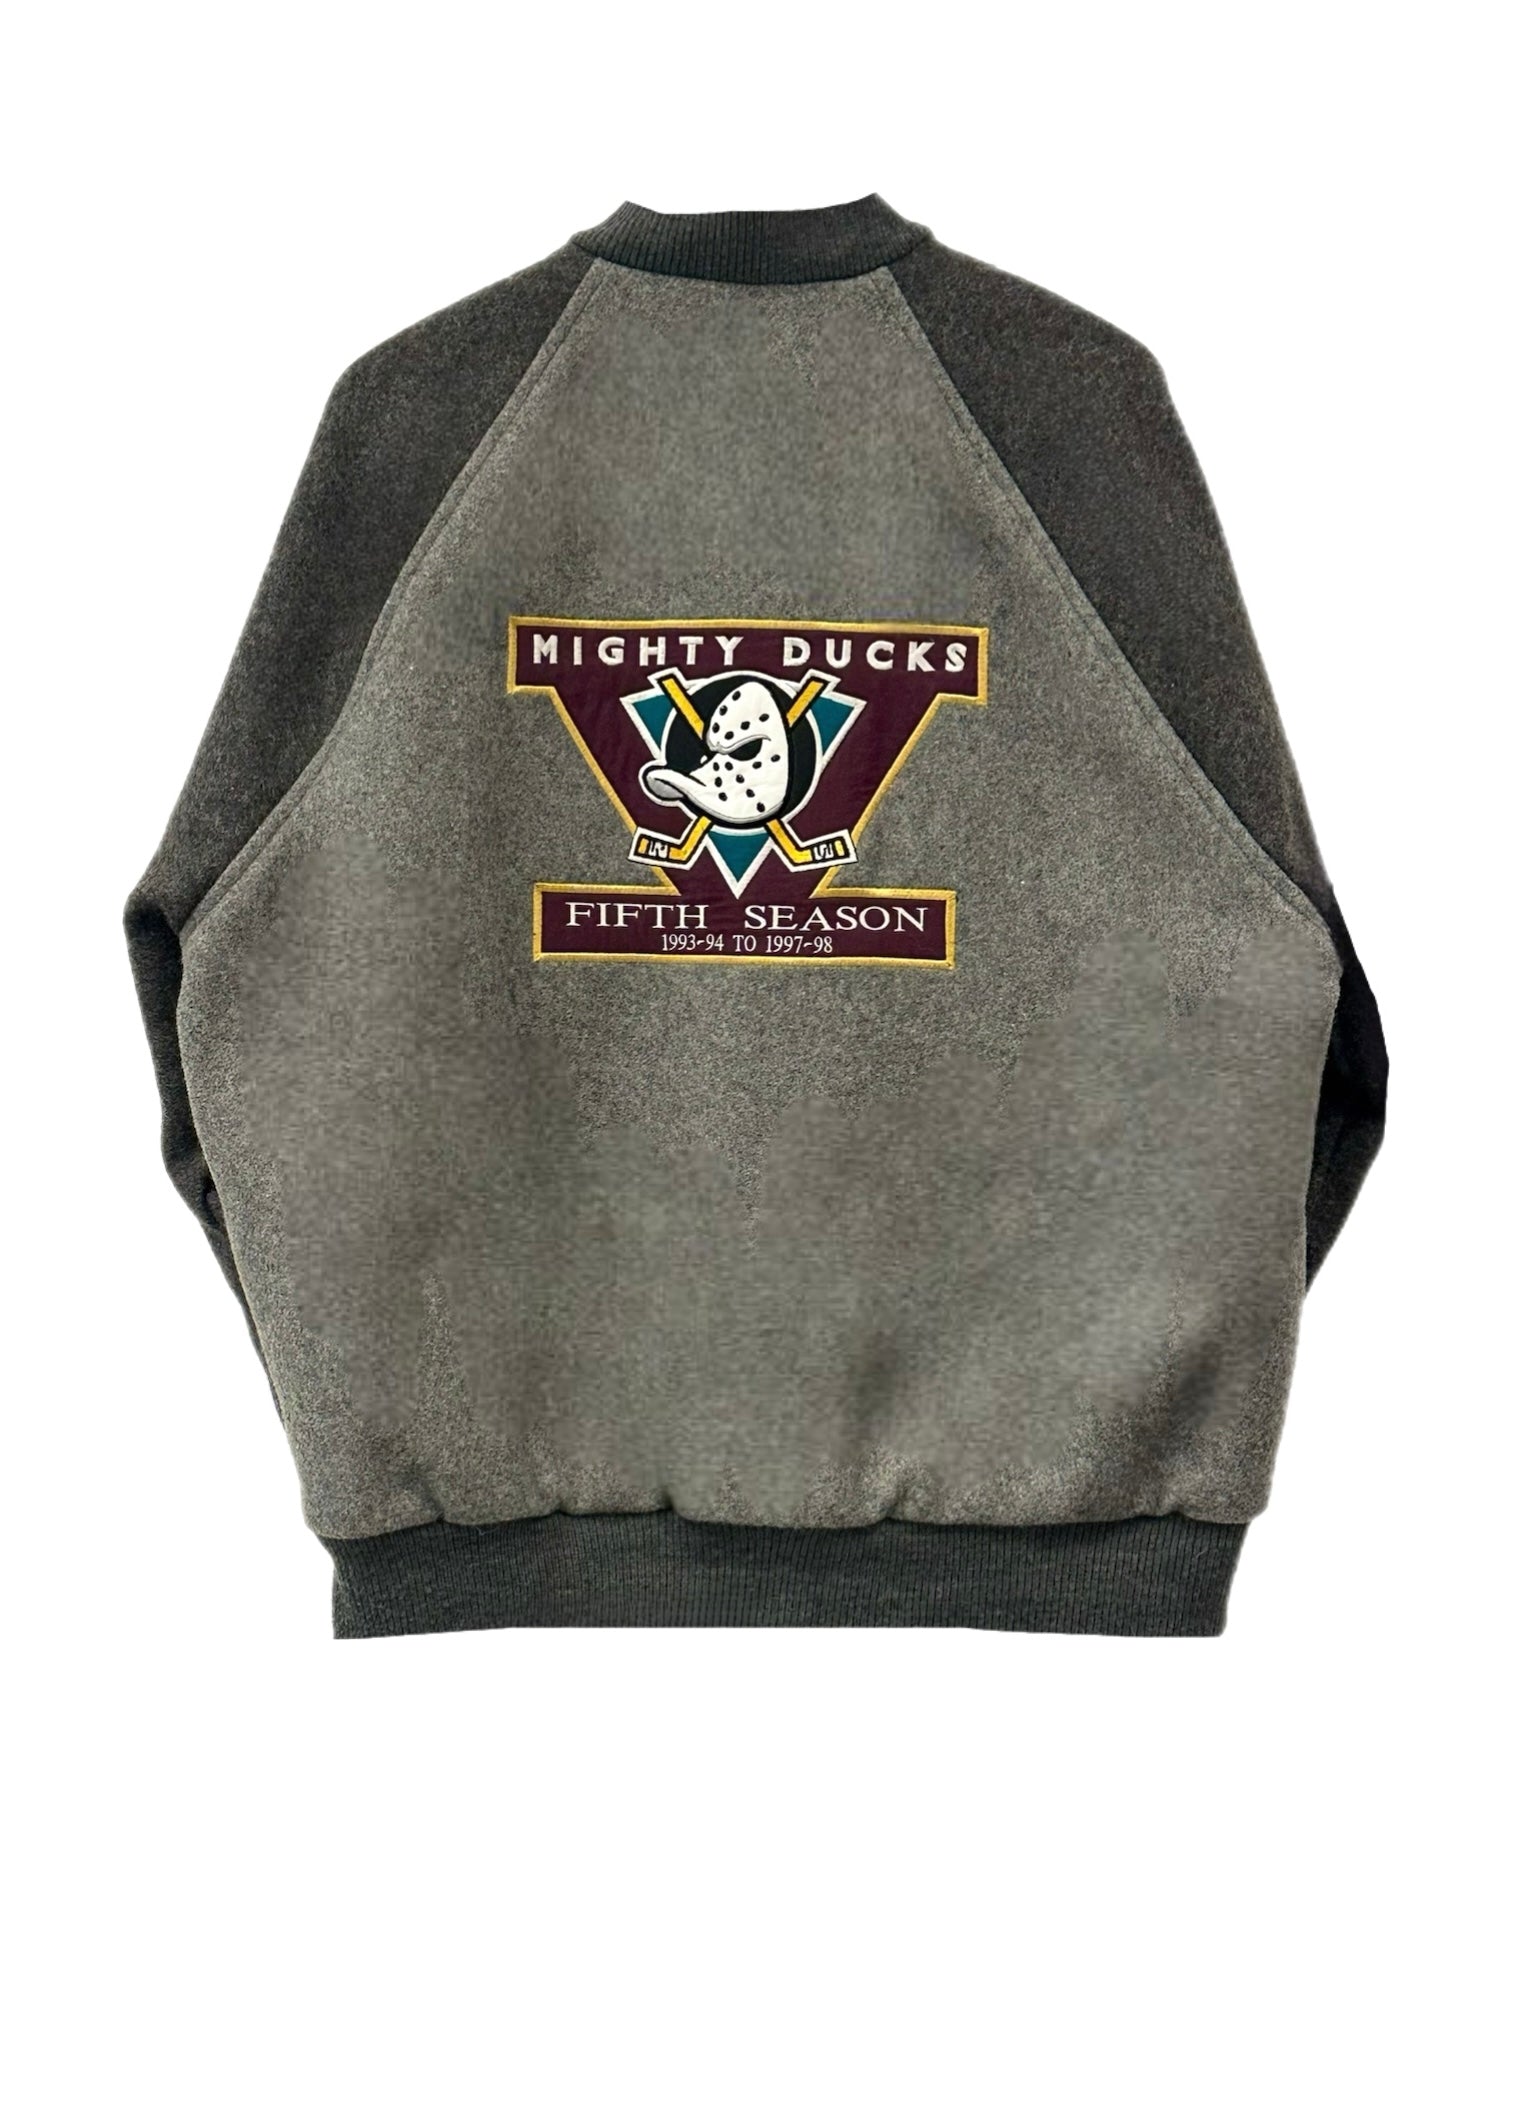 ShopCrystalRags Anaheim Ducks, NHL One of A Kind Vintage “Mighty Ducks” Sweatshirt with Crystal Star Design